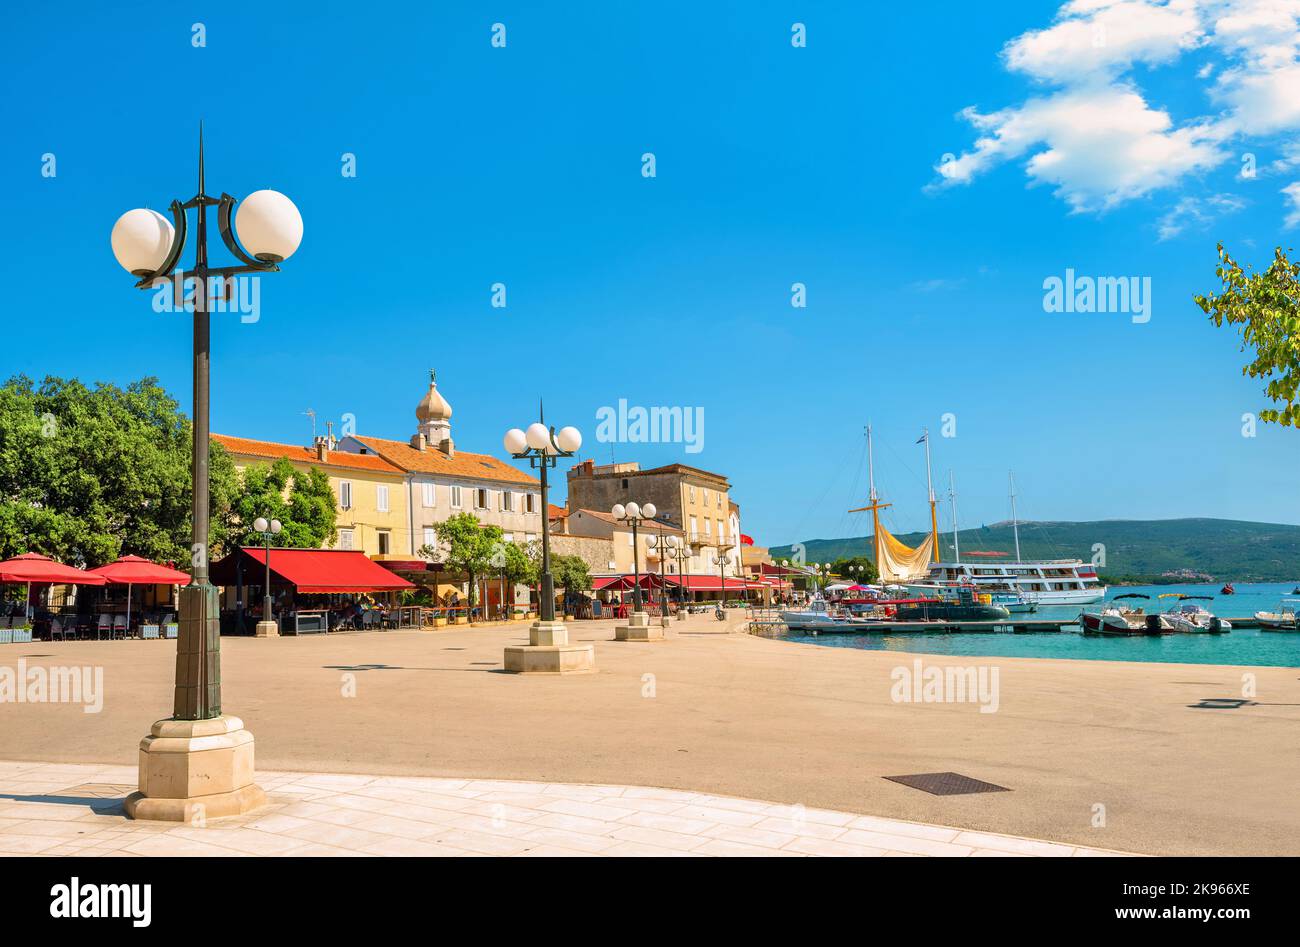 Coastal promenade of mediterranean old town Krk. Island Krk, Croatia Stock Photo